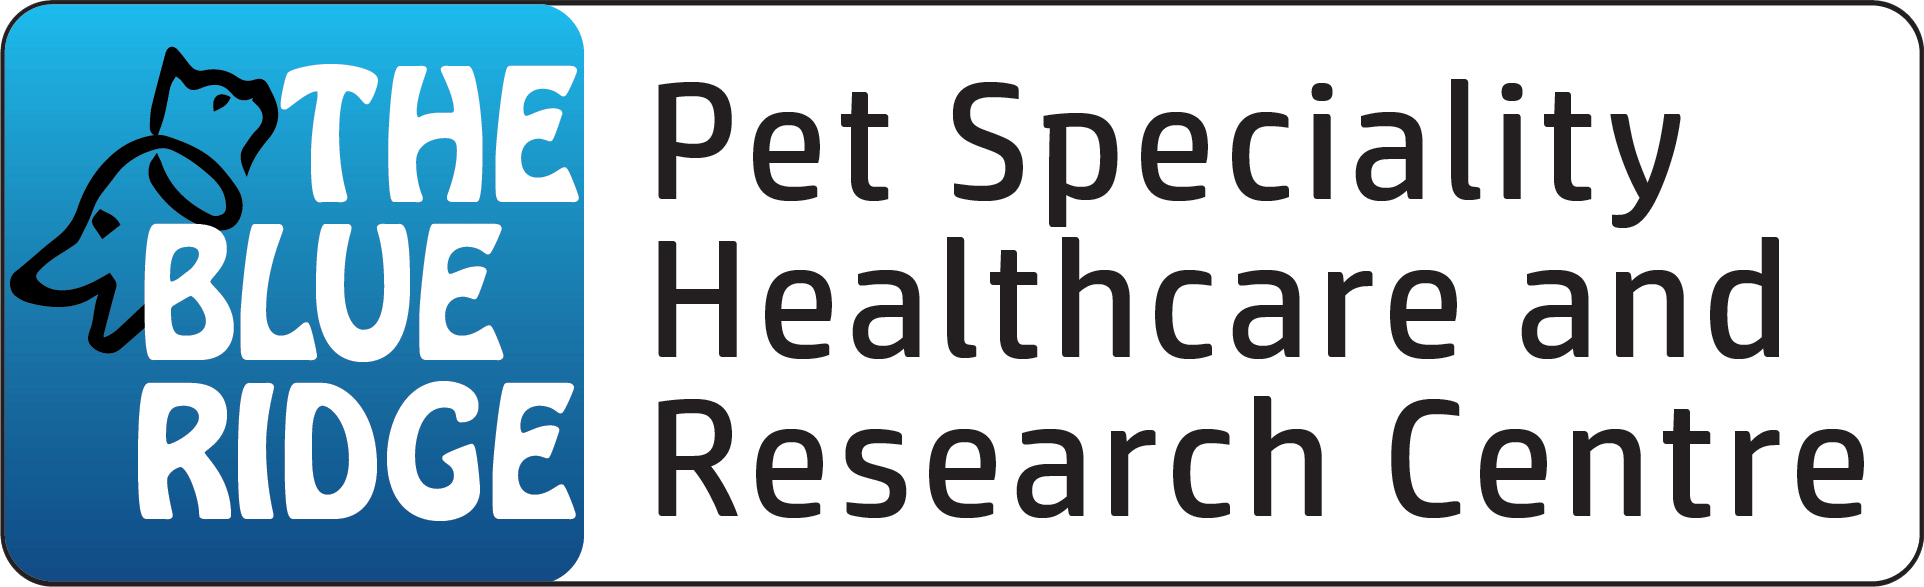 The Blue Ridge Pet Speciality Healthcare